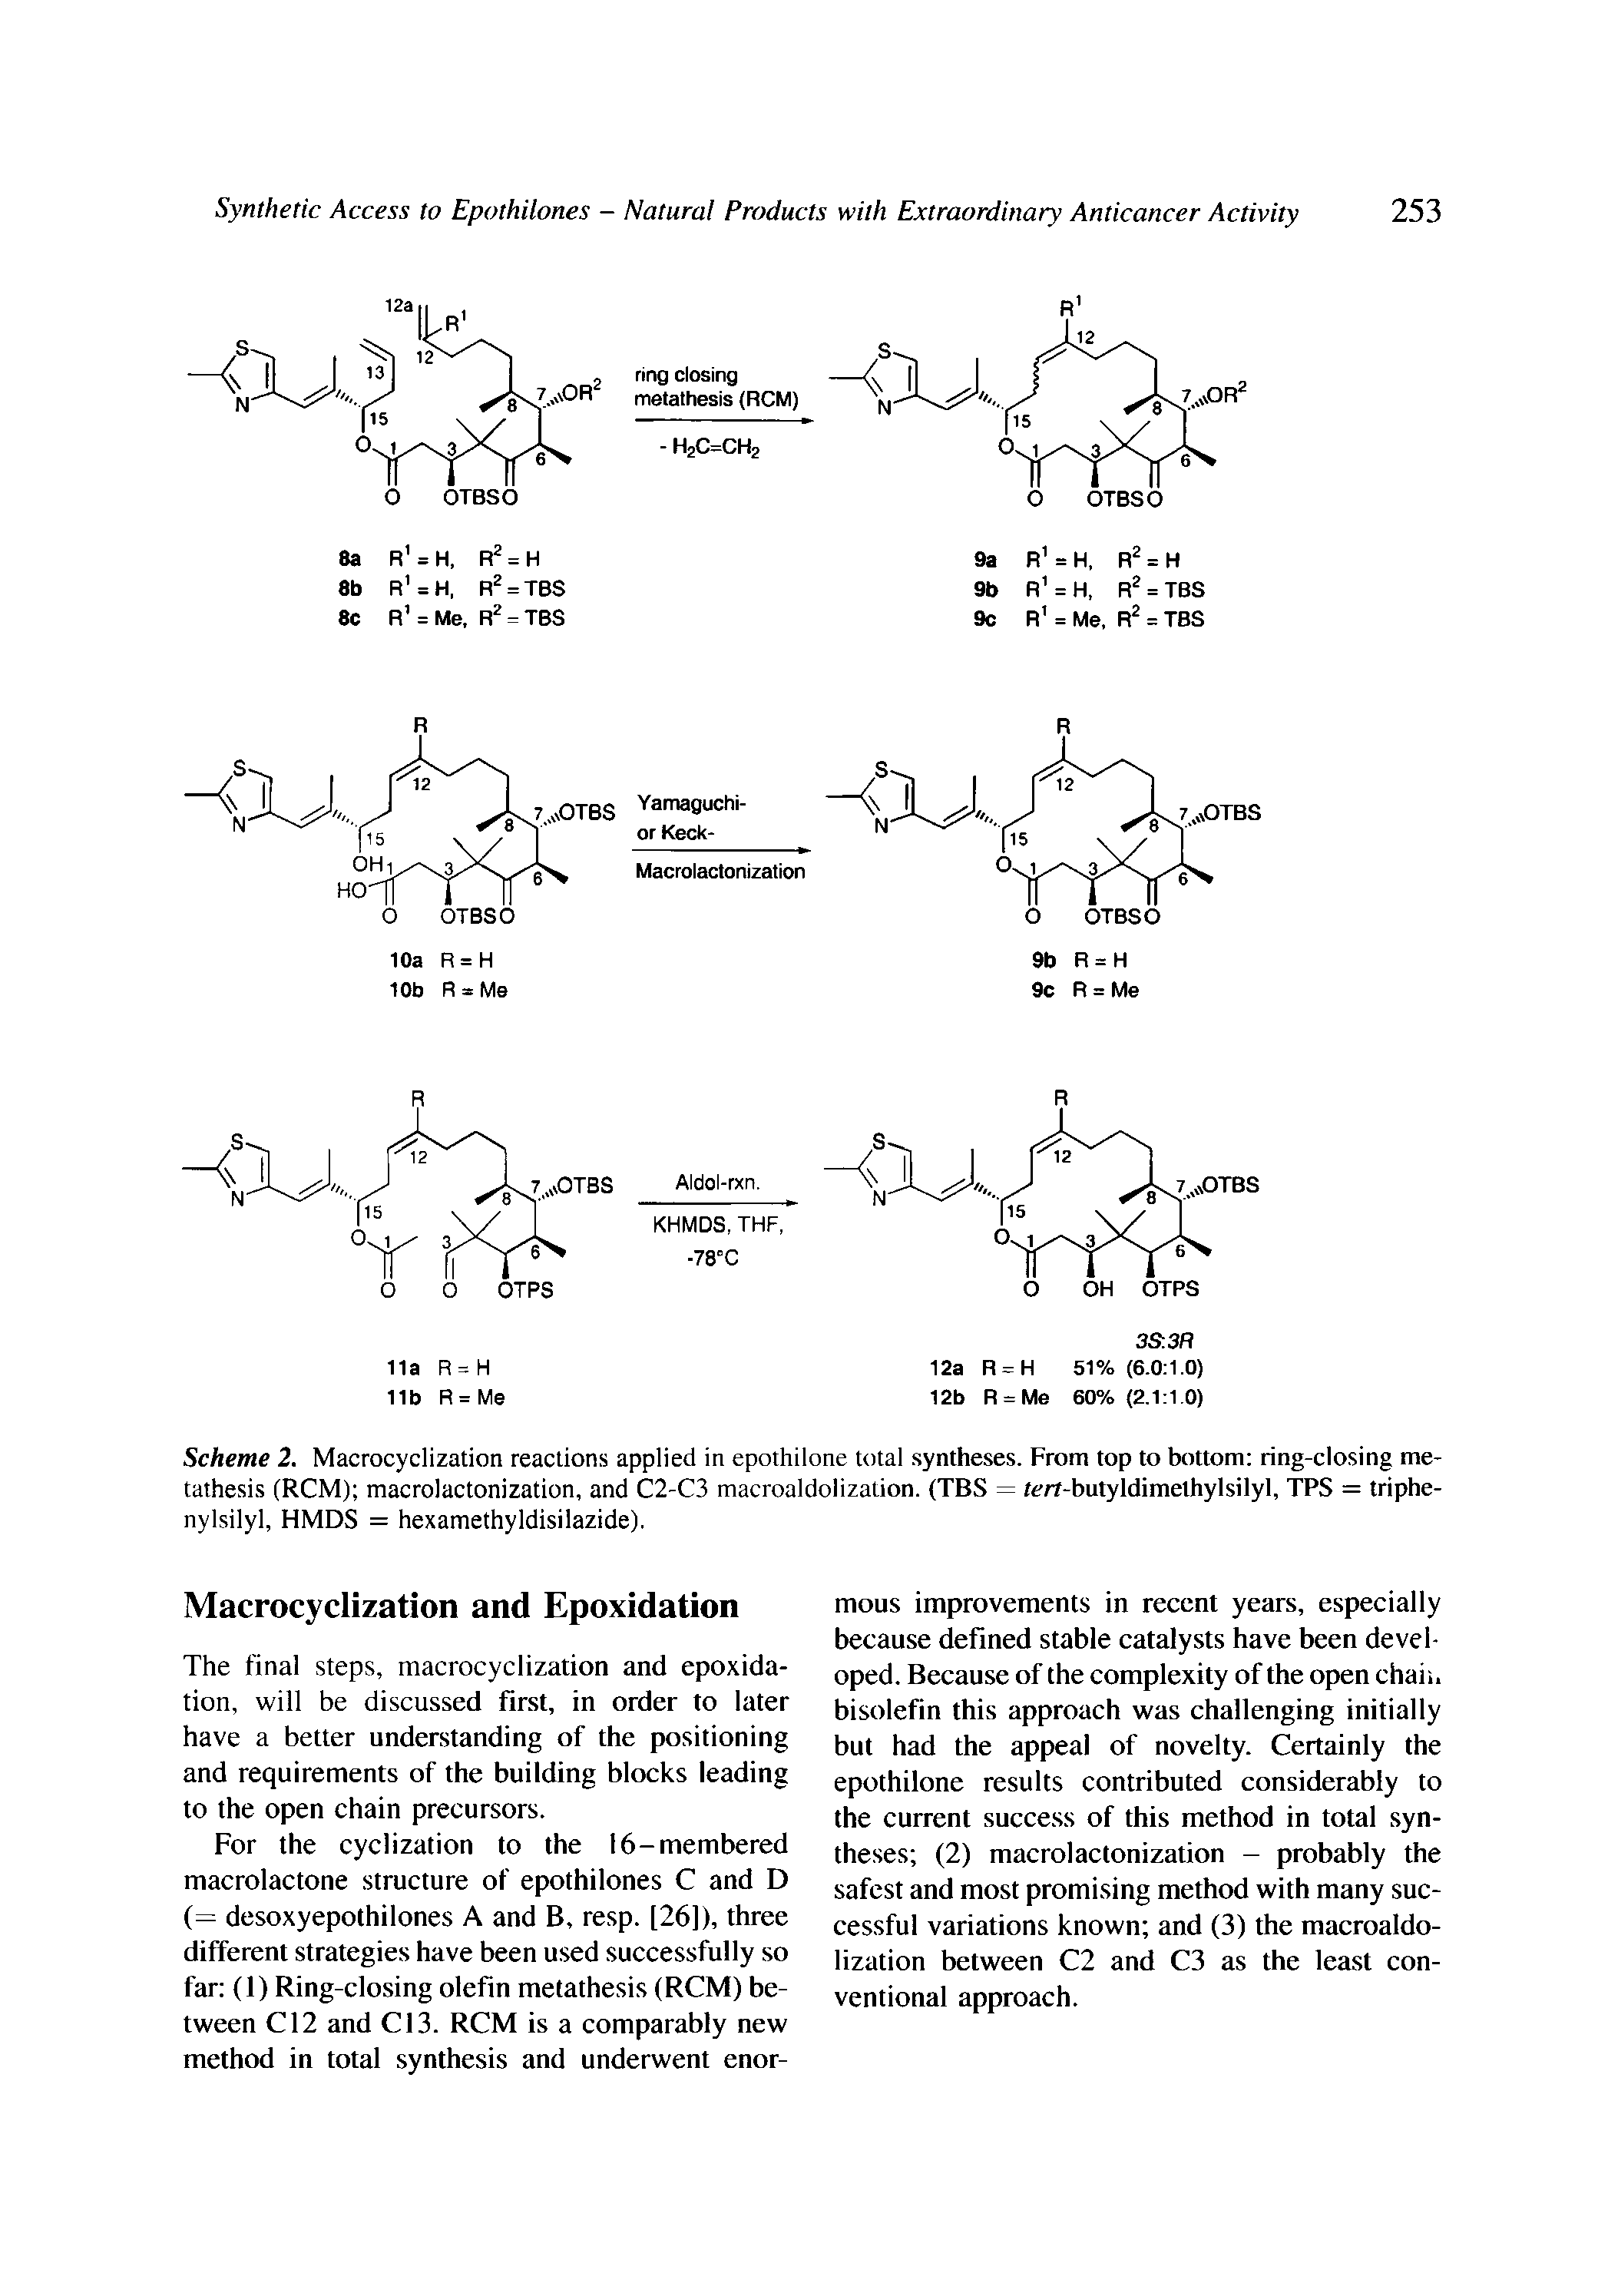 Scheme 2. Macrocyclization reactions applied in epothilone total syntheses. From top to bottom ring-closing me-tathesis (RCM) macrolactonization, and C2-C3 macroaldolizalion. (TBS = tert-butyldimethylsilyl, TPS = triphe-nylsilyl, HMDS = hexamethyldisilazide).